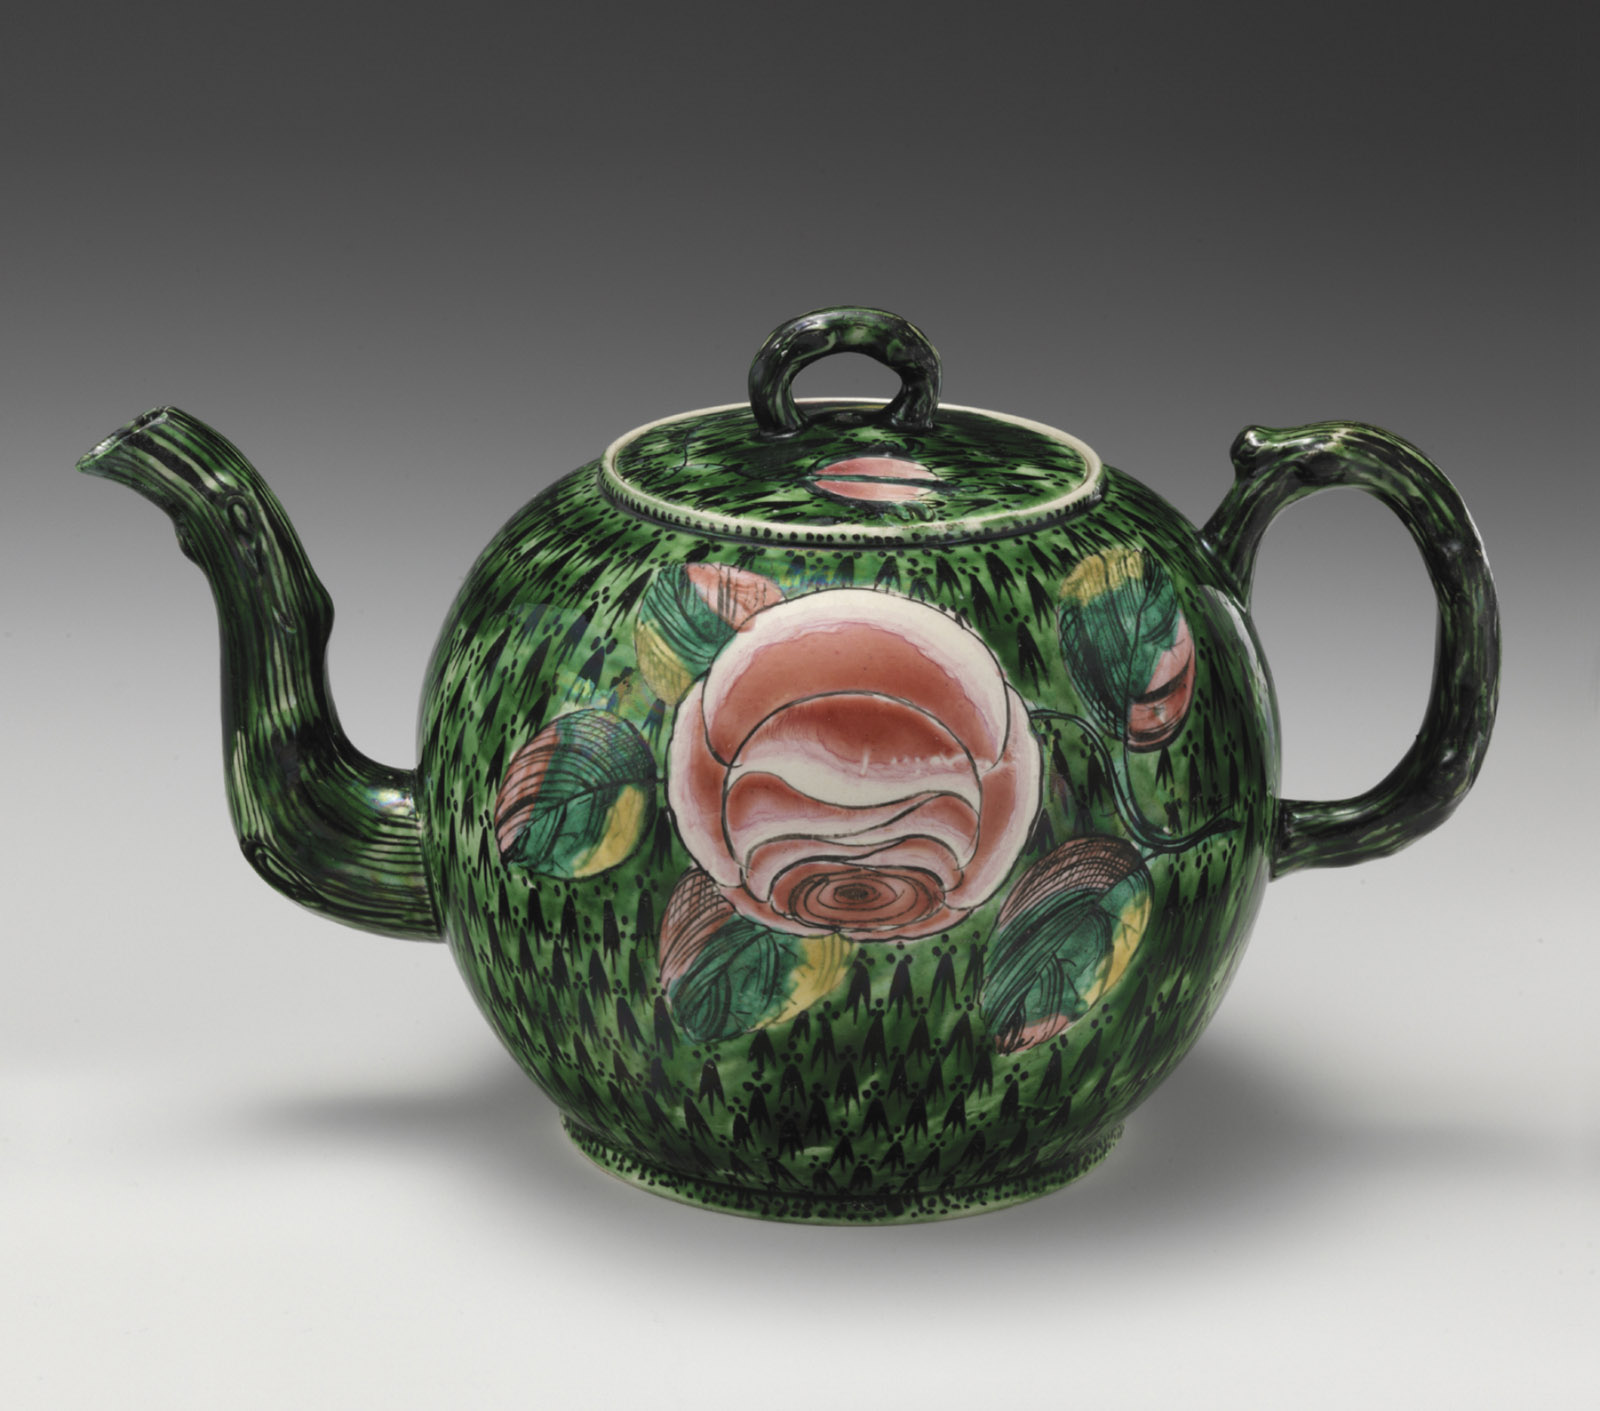 Staffordshire teapot